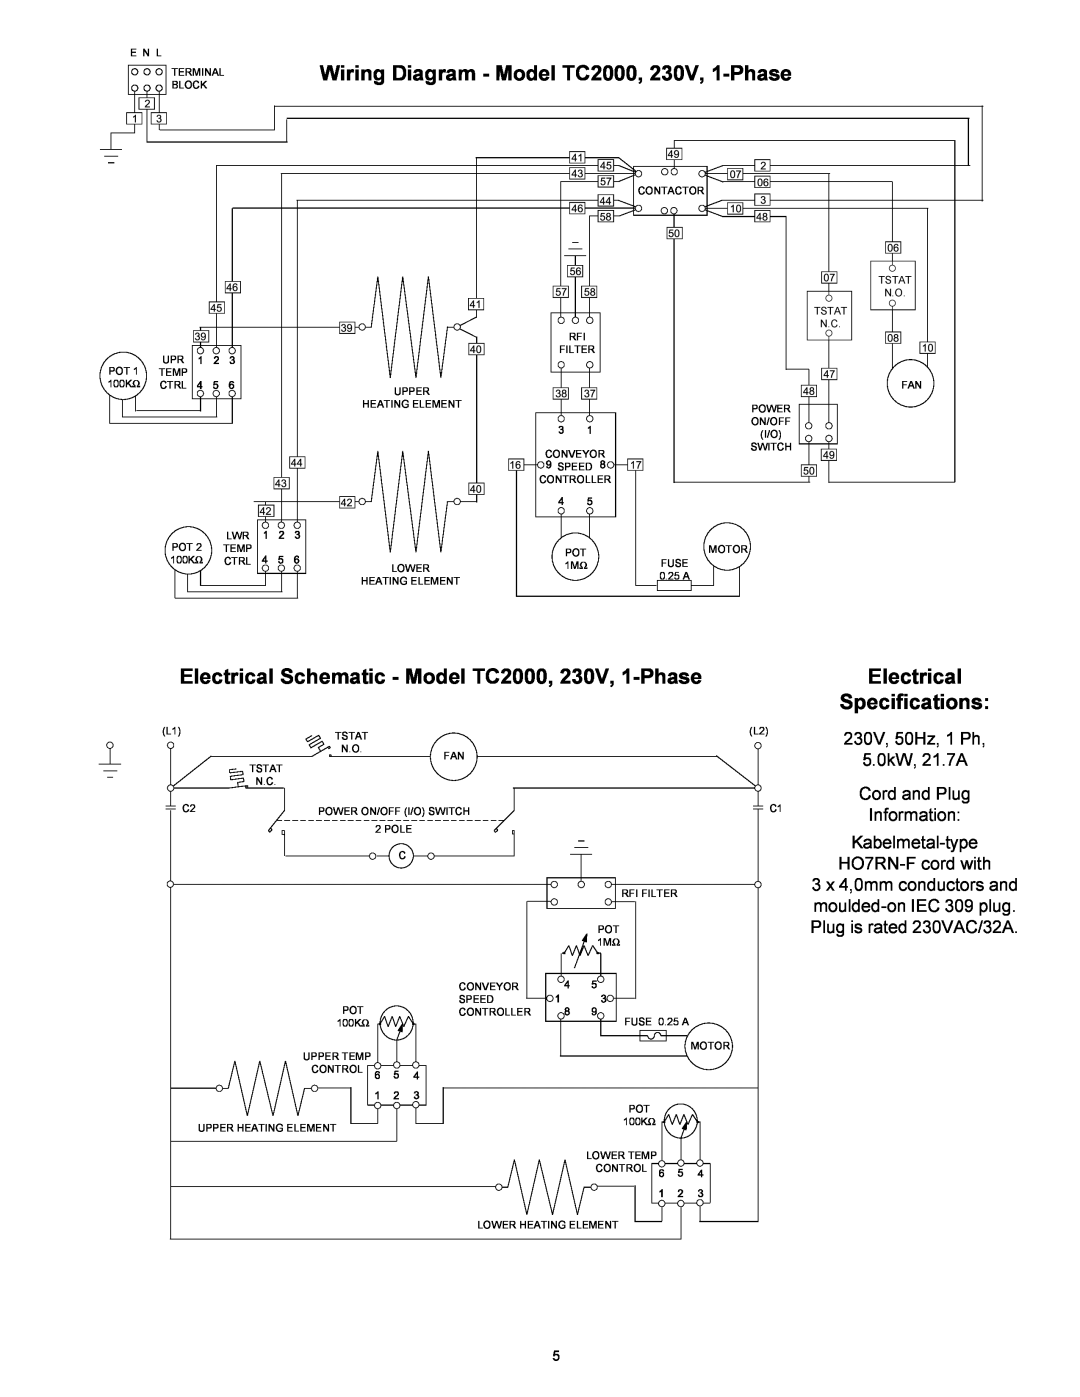 Toastmaster Wiring Diagram - Model TC2000, 230V, 1-Phase, Electrical Schematic - Model TC2000, 230V, 1-Phase 